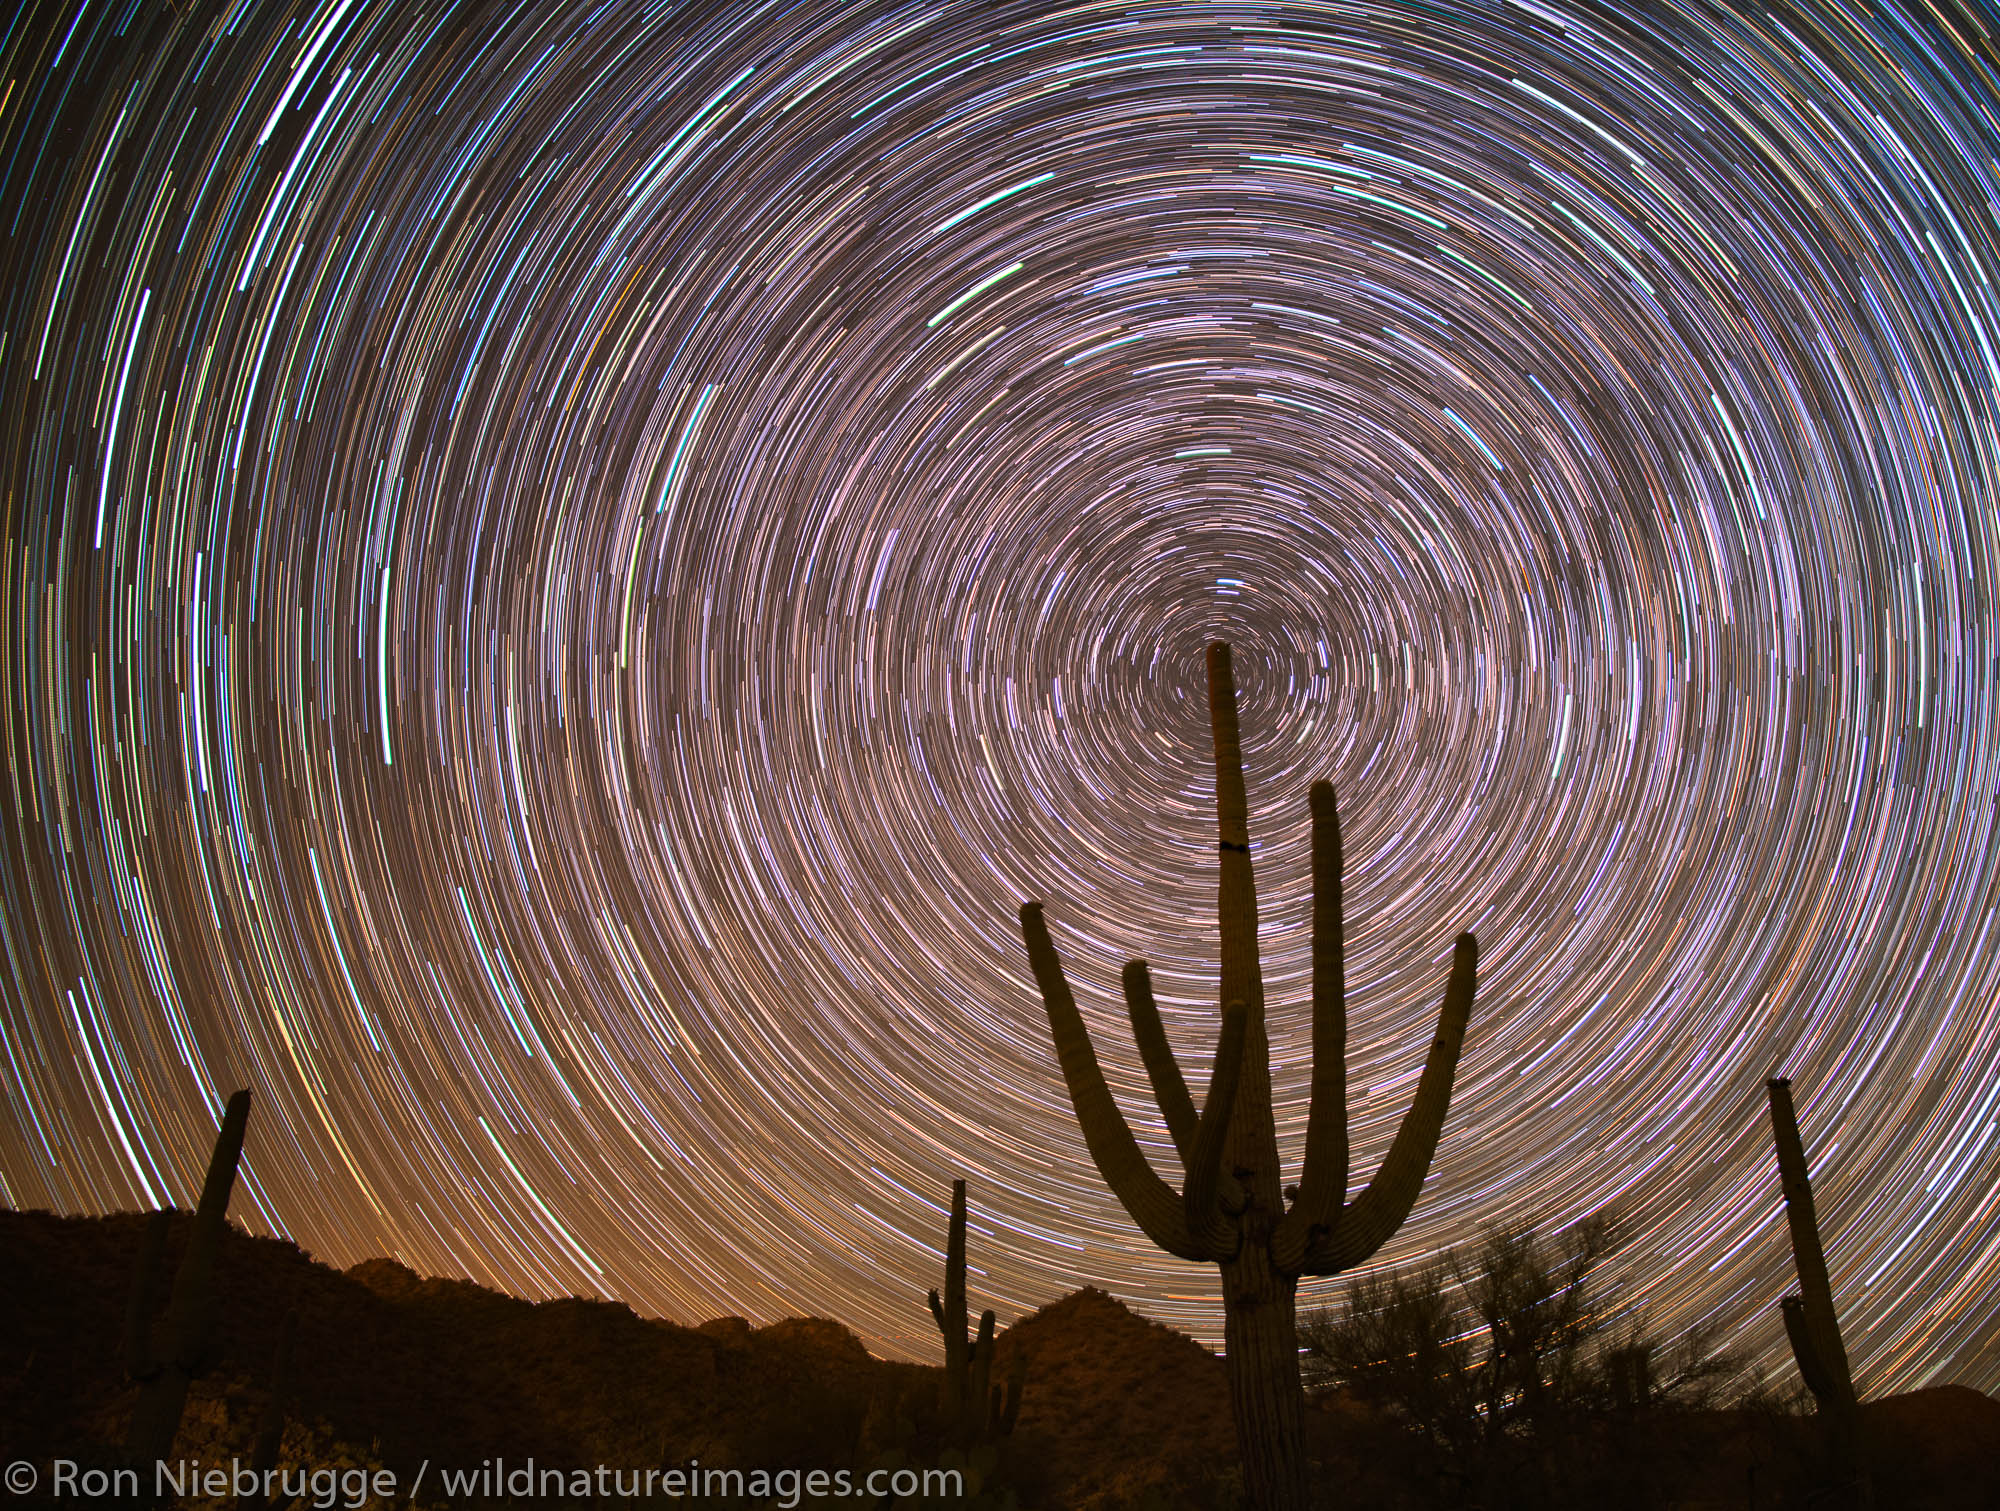 Star Trails with Saguaro cactus silhouetted.  Arizona.